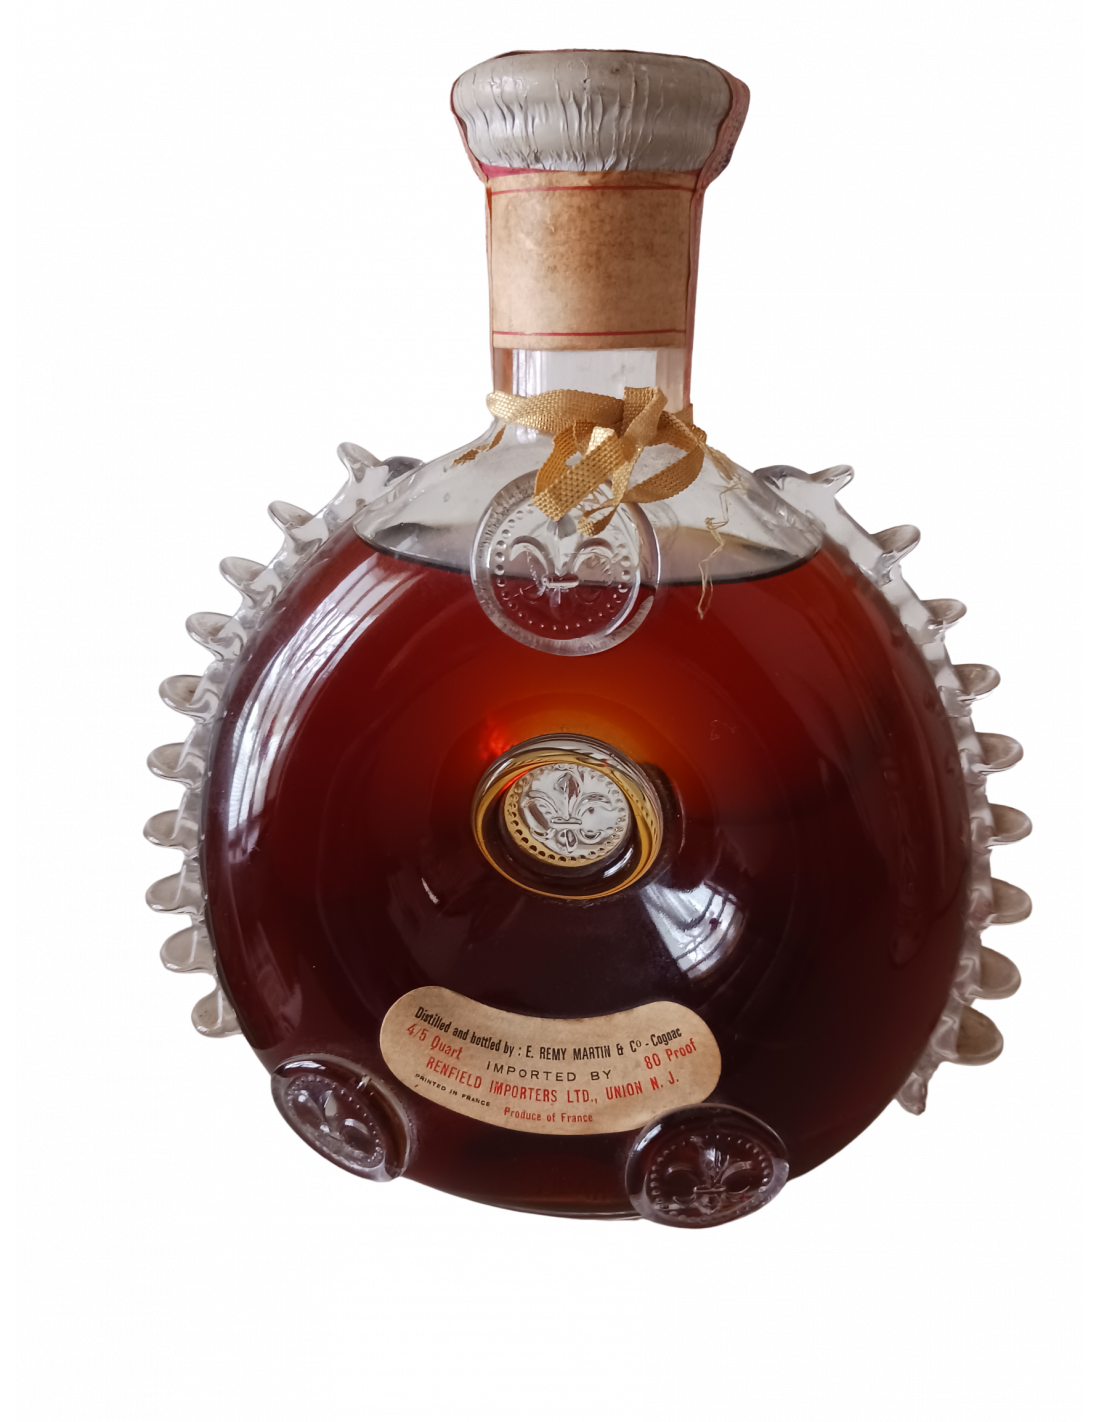 Remy Martin Cognac Louis XIII Brand Rarest Reserve